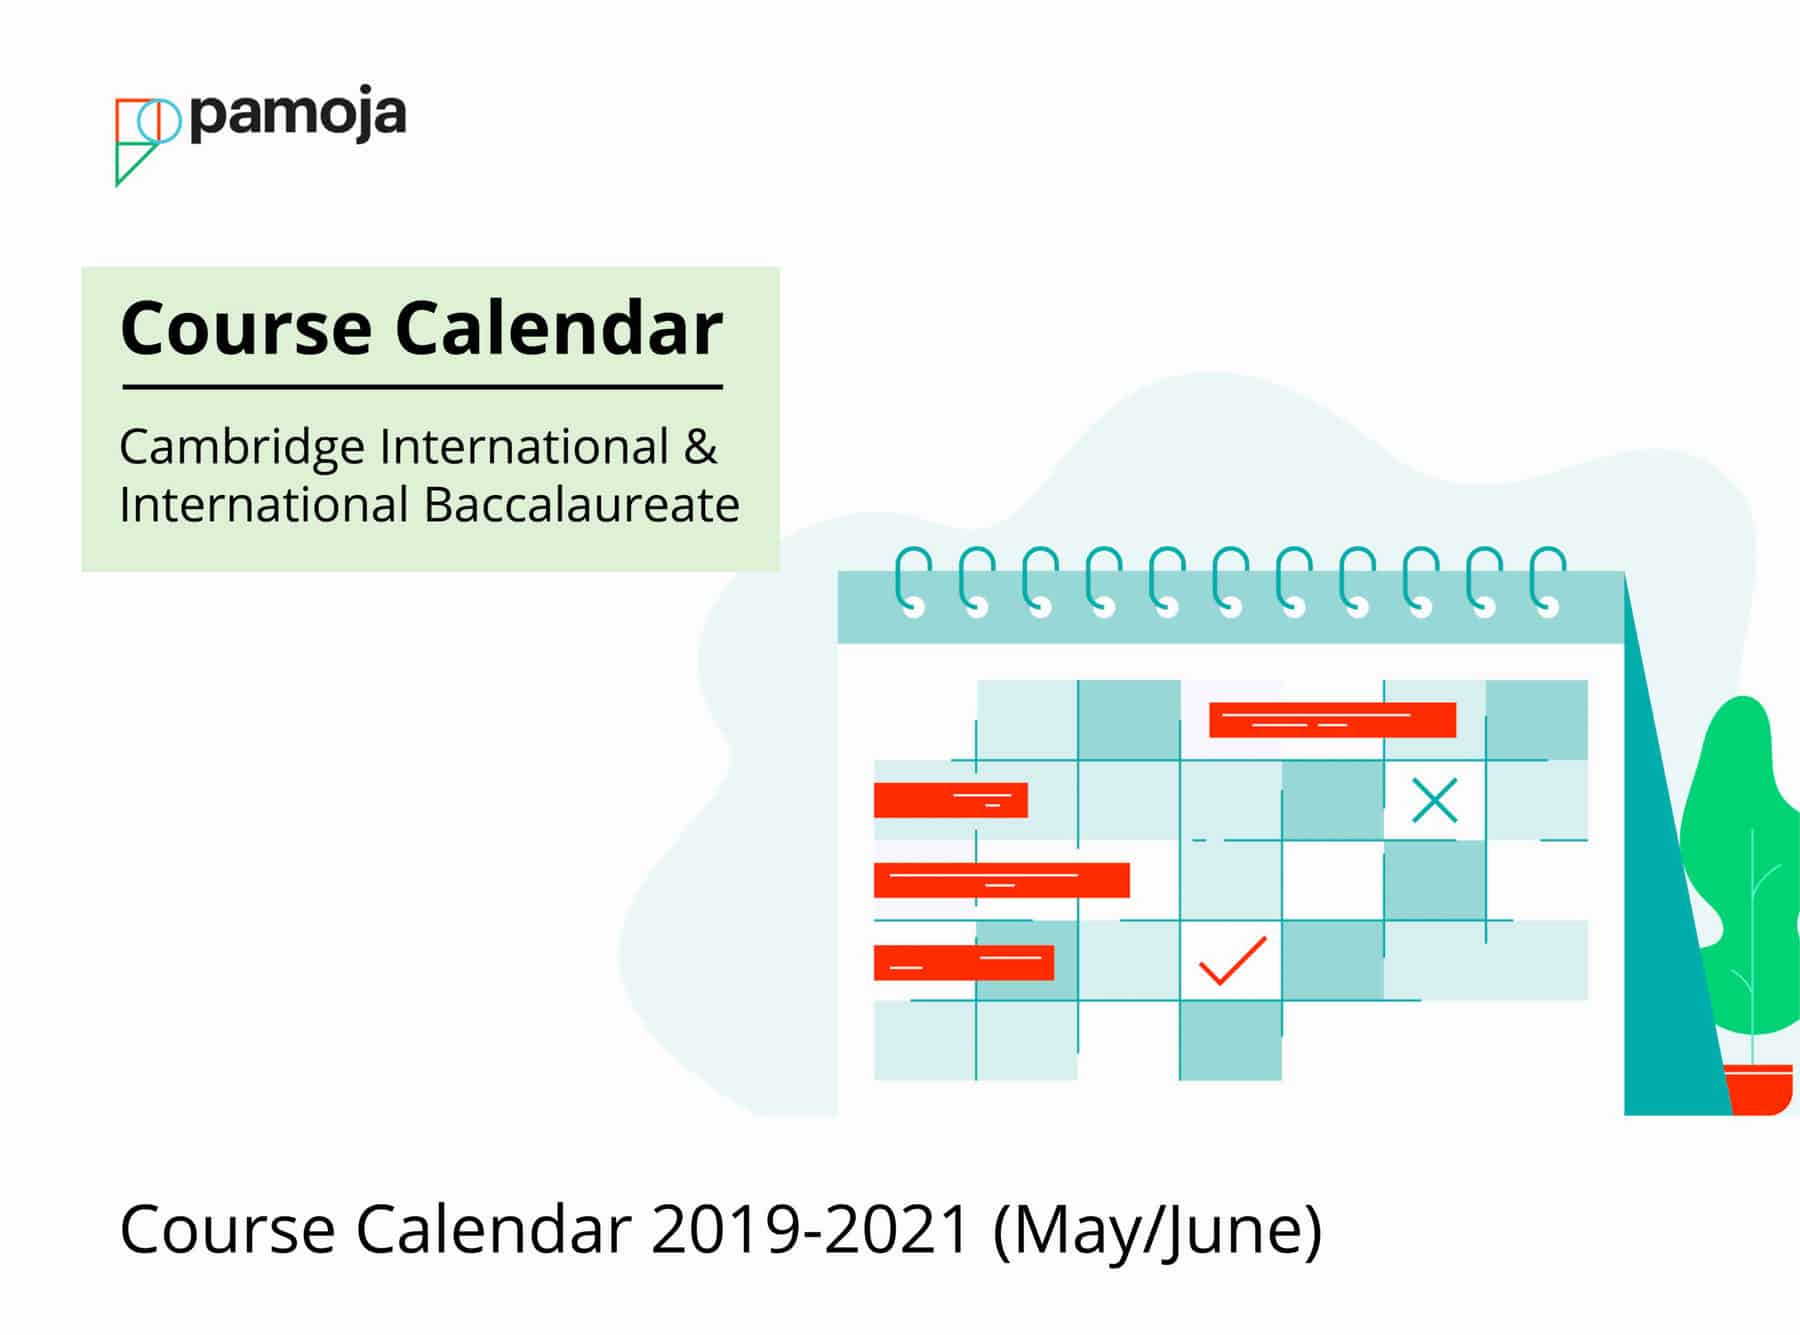 Course Calendar 2019/2021 (May/June)